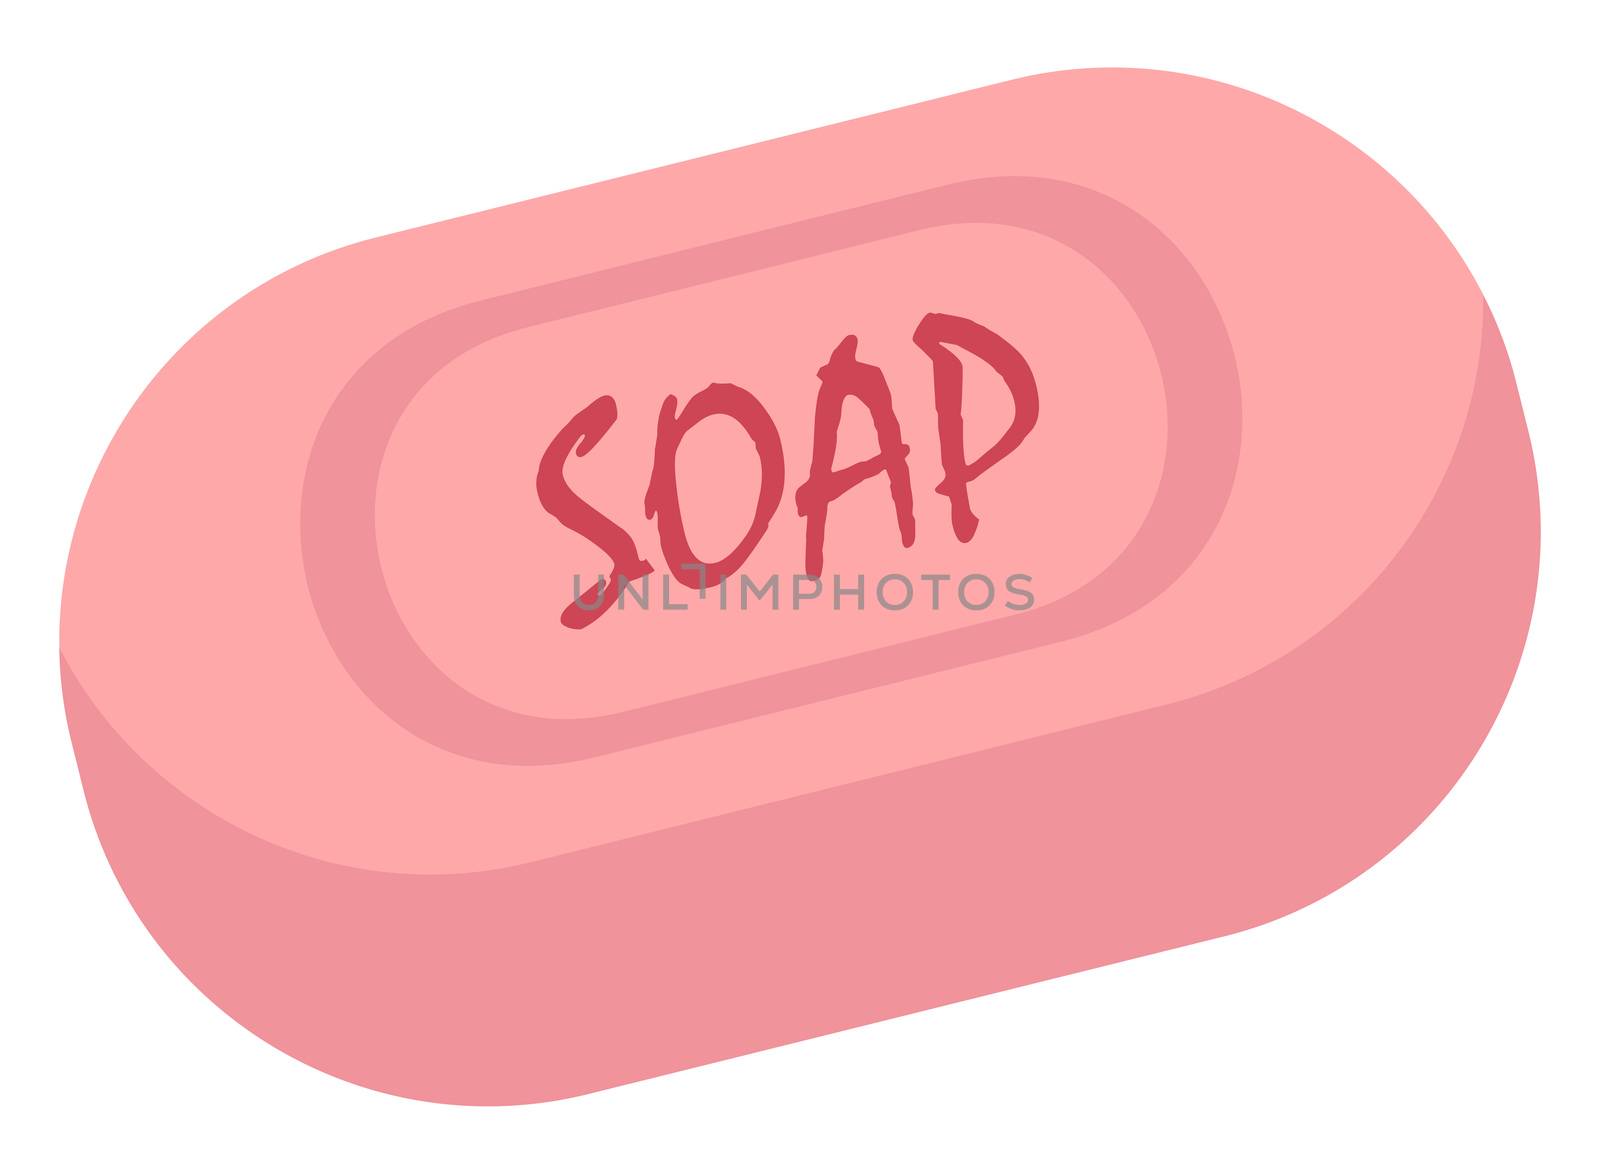 Hand  soap, illustration, vector on white background by Morphart